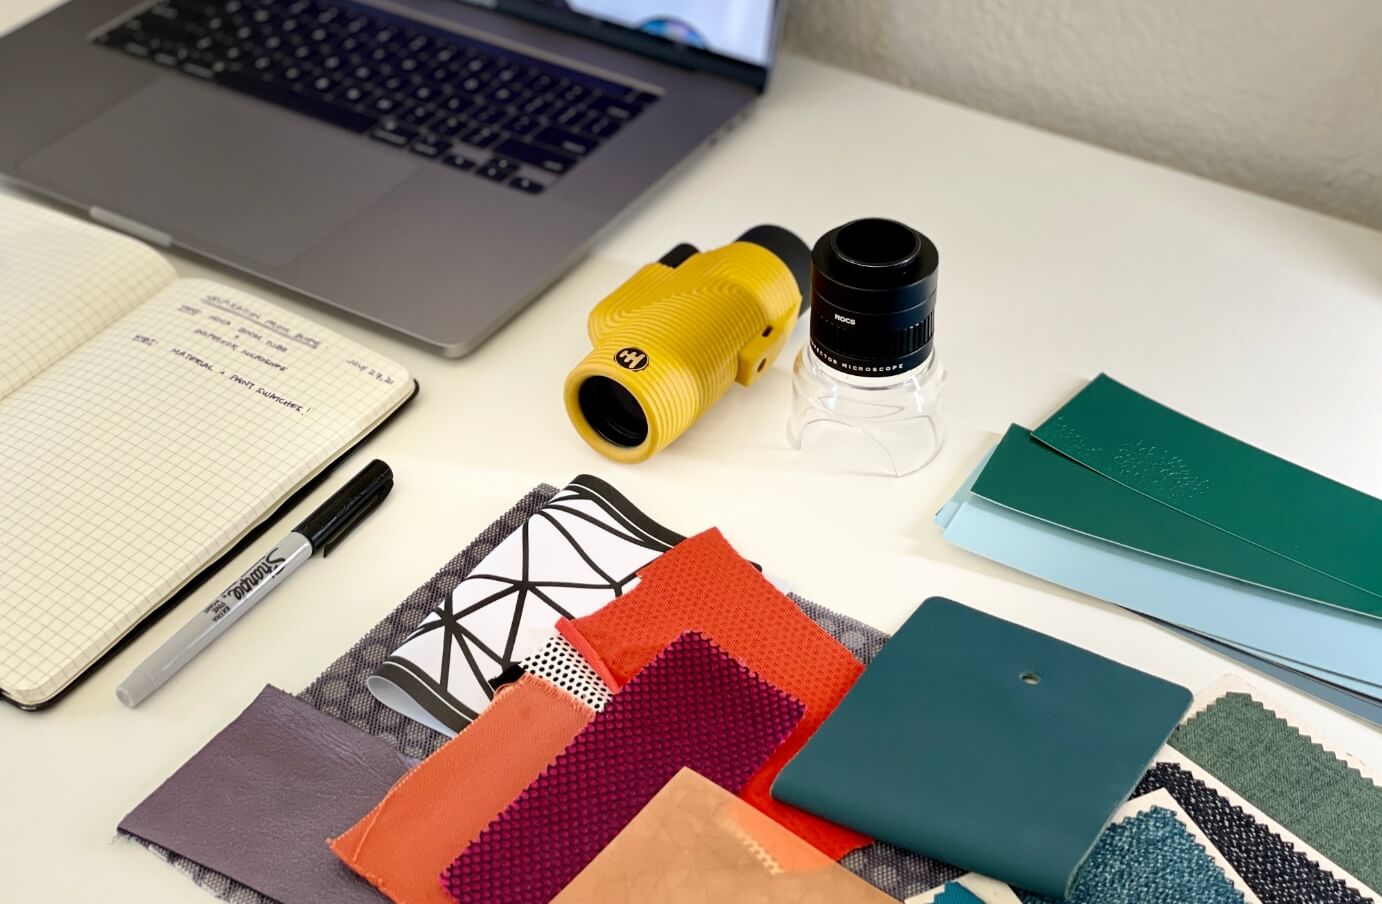 items on a desk arranged nicely: a laptop, a nocs monocular, a notebook, scrap paper